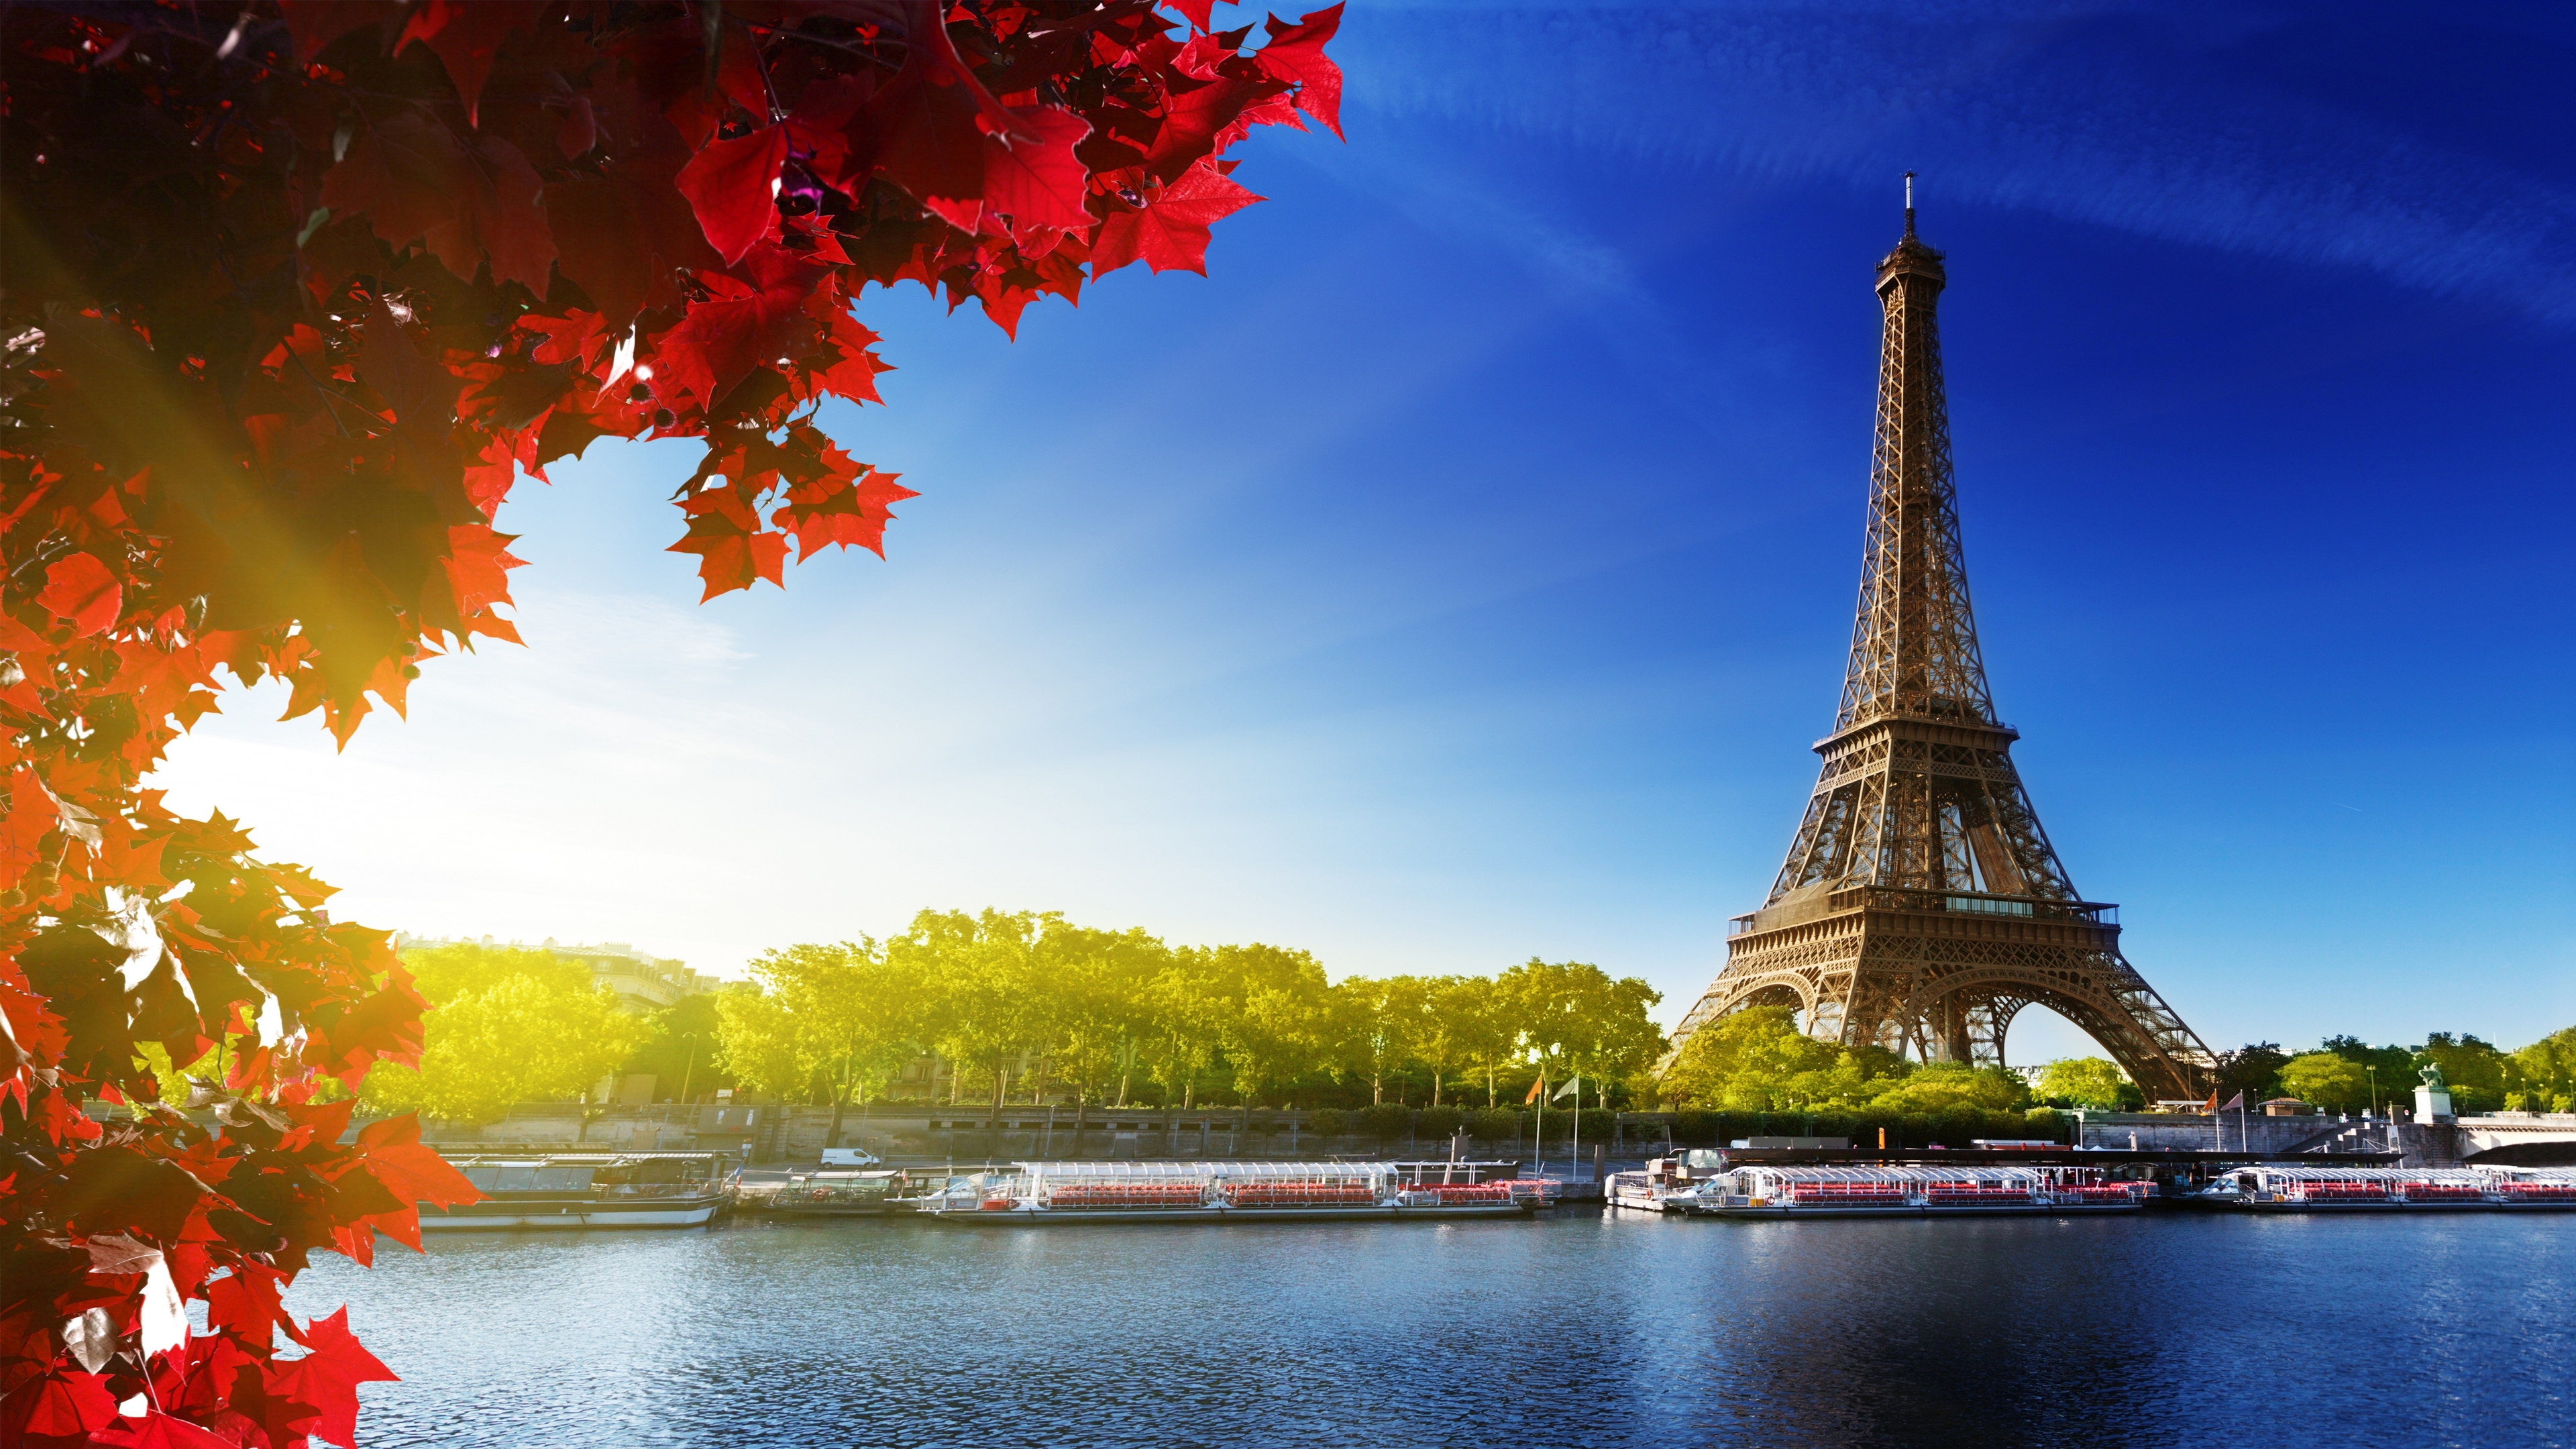 Eiffel Tower Paris for 3840 x 2160 4K Ultra HDTV resolution